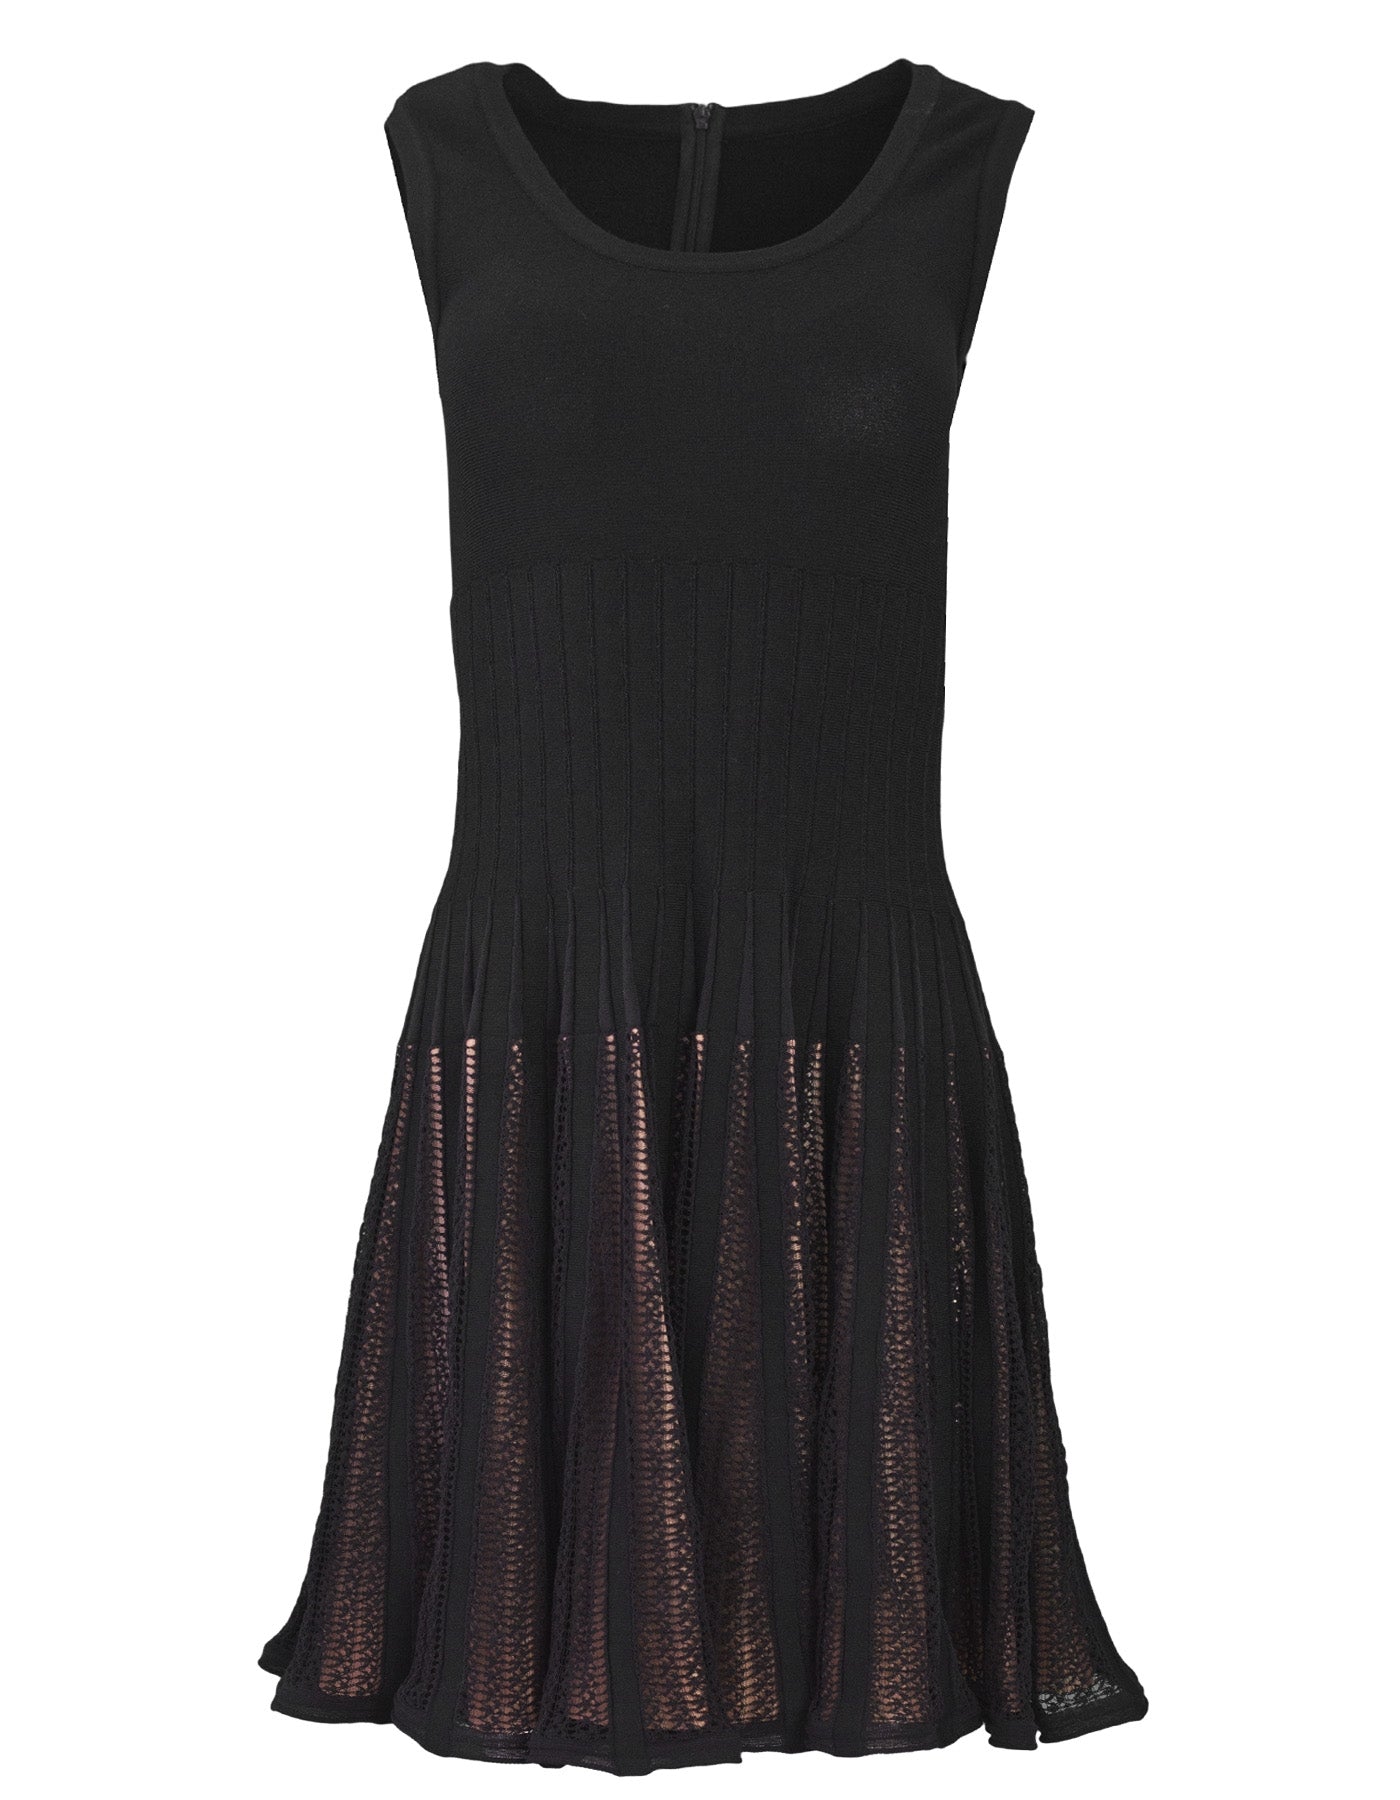 Alaia Black Skater Dress with Nude Underlay sz FR40